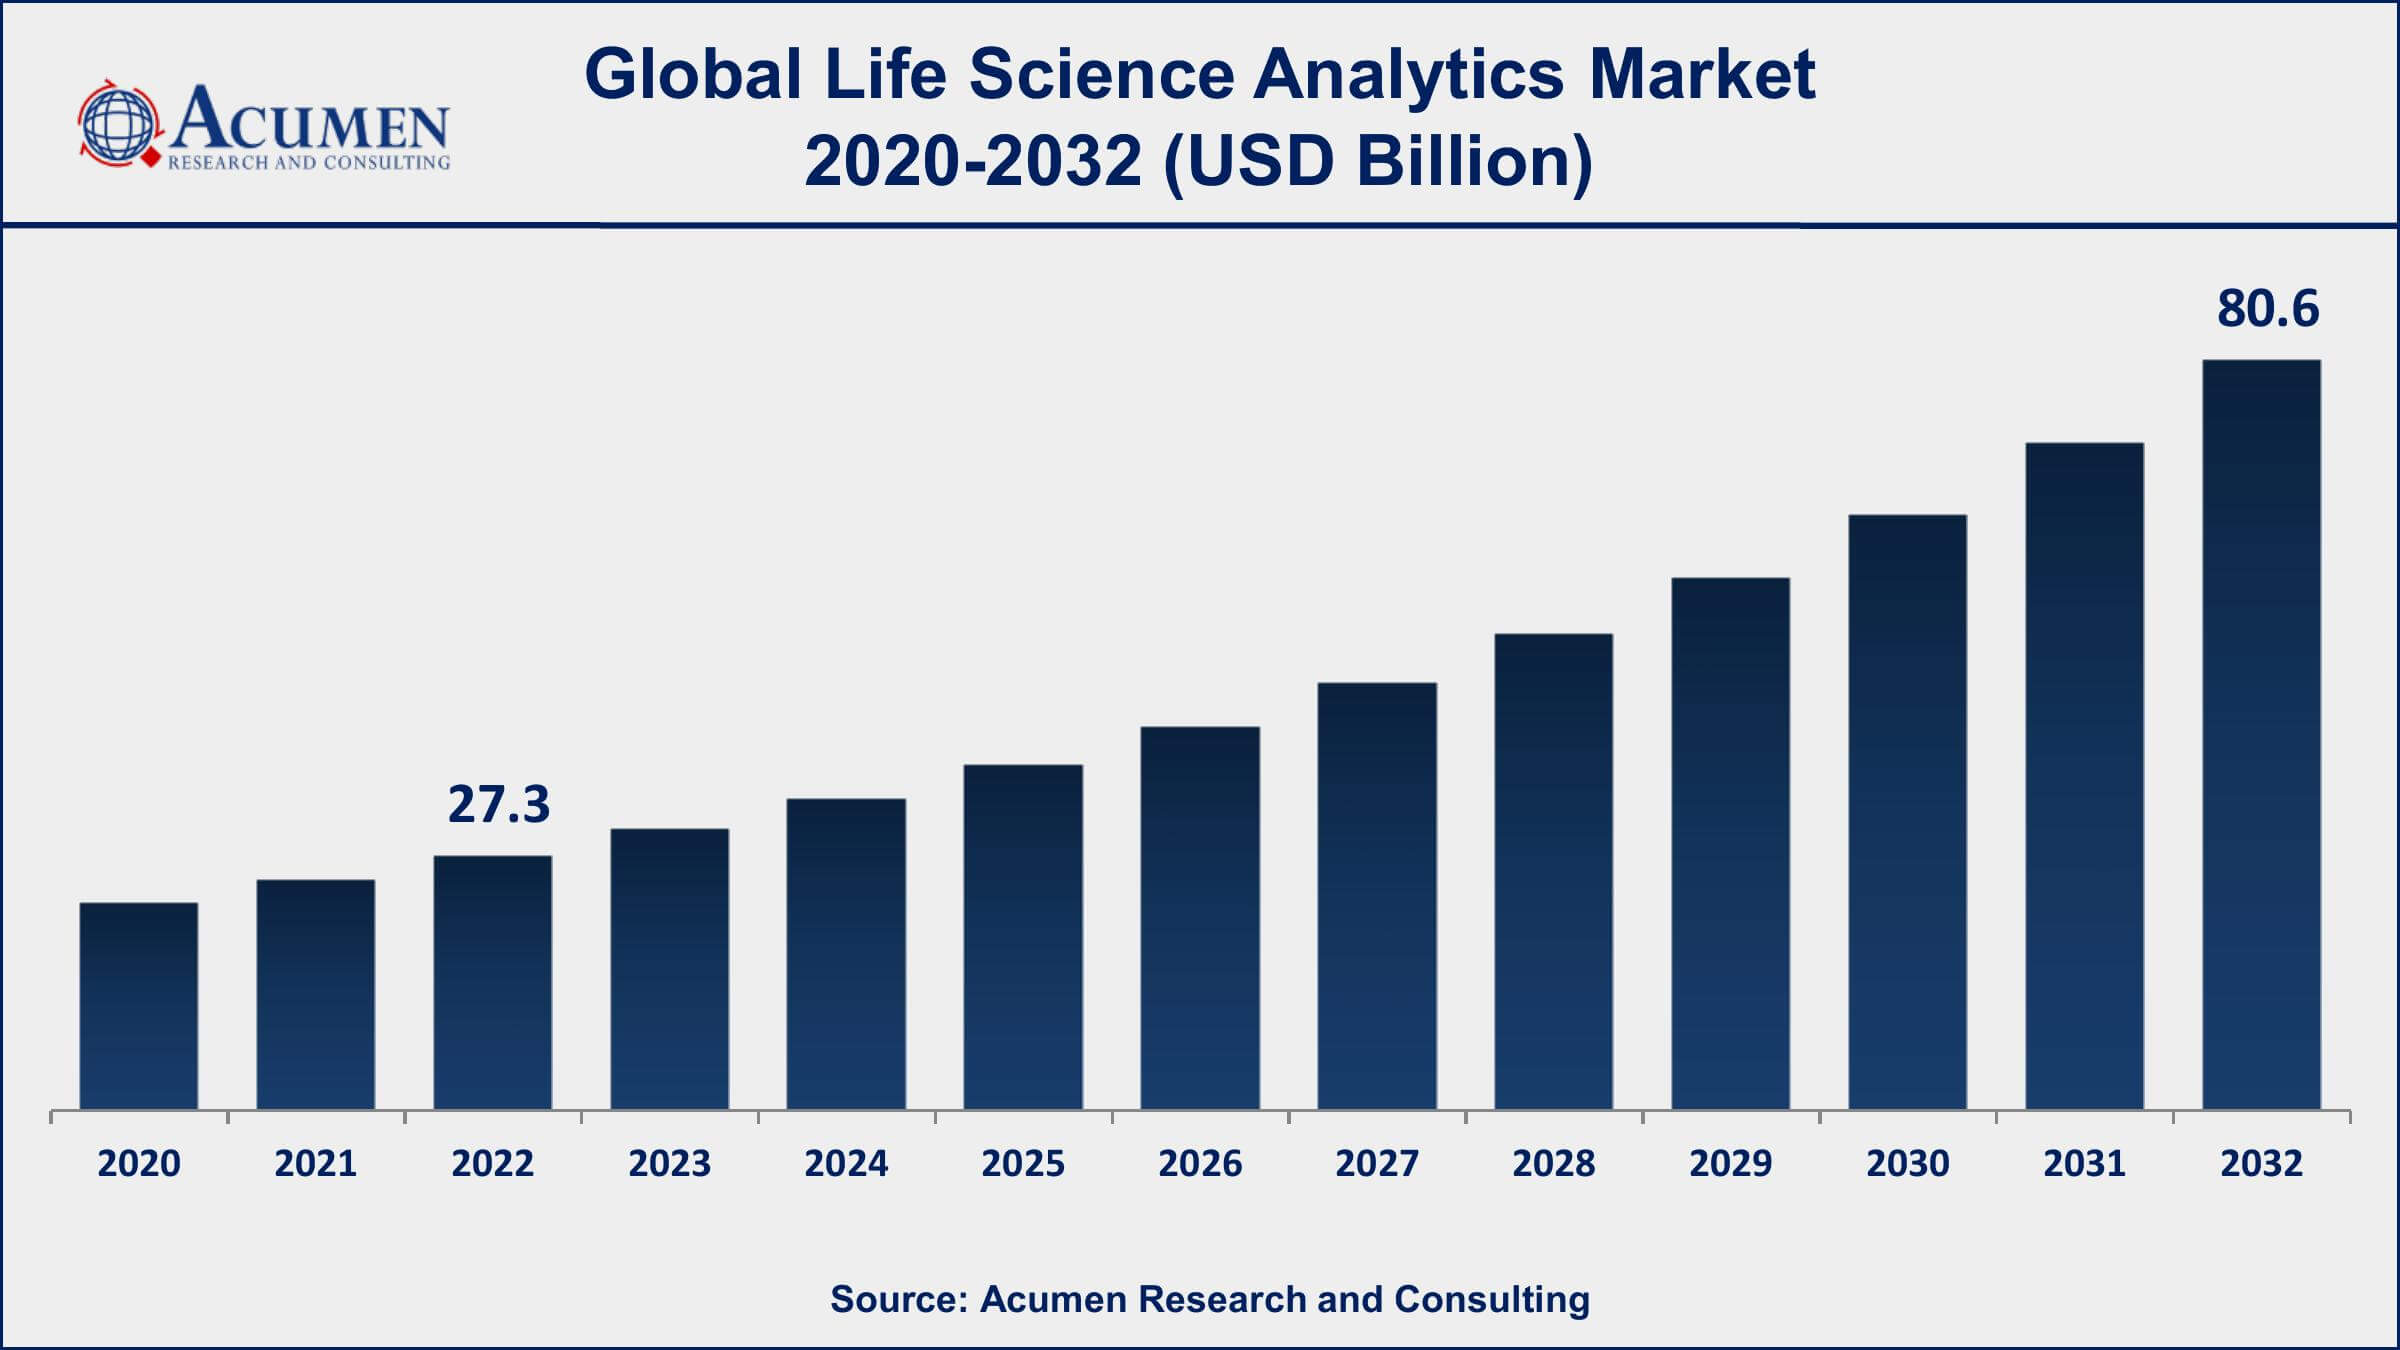 Life Science Analytics Market Analysis Period